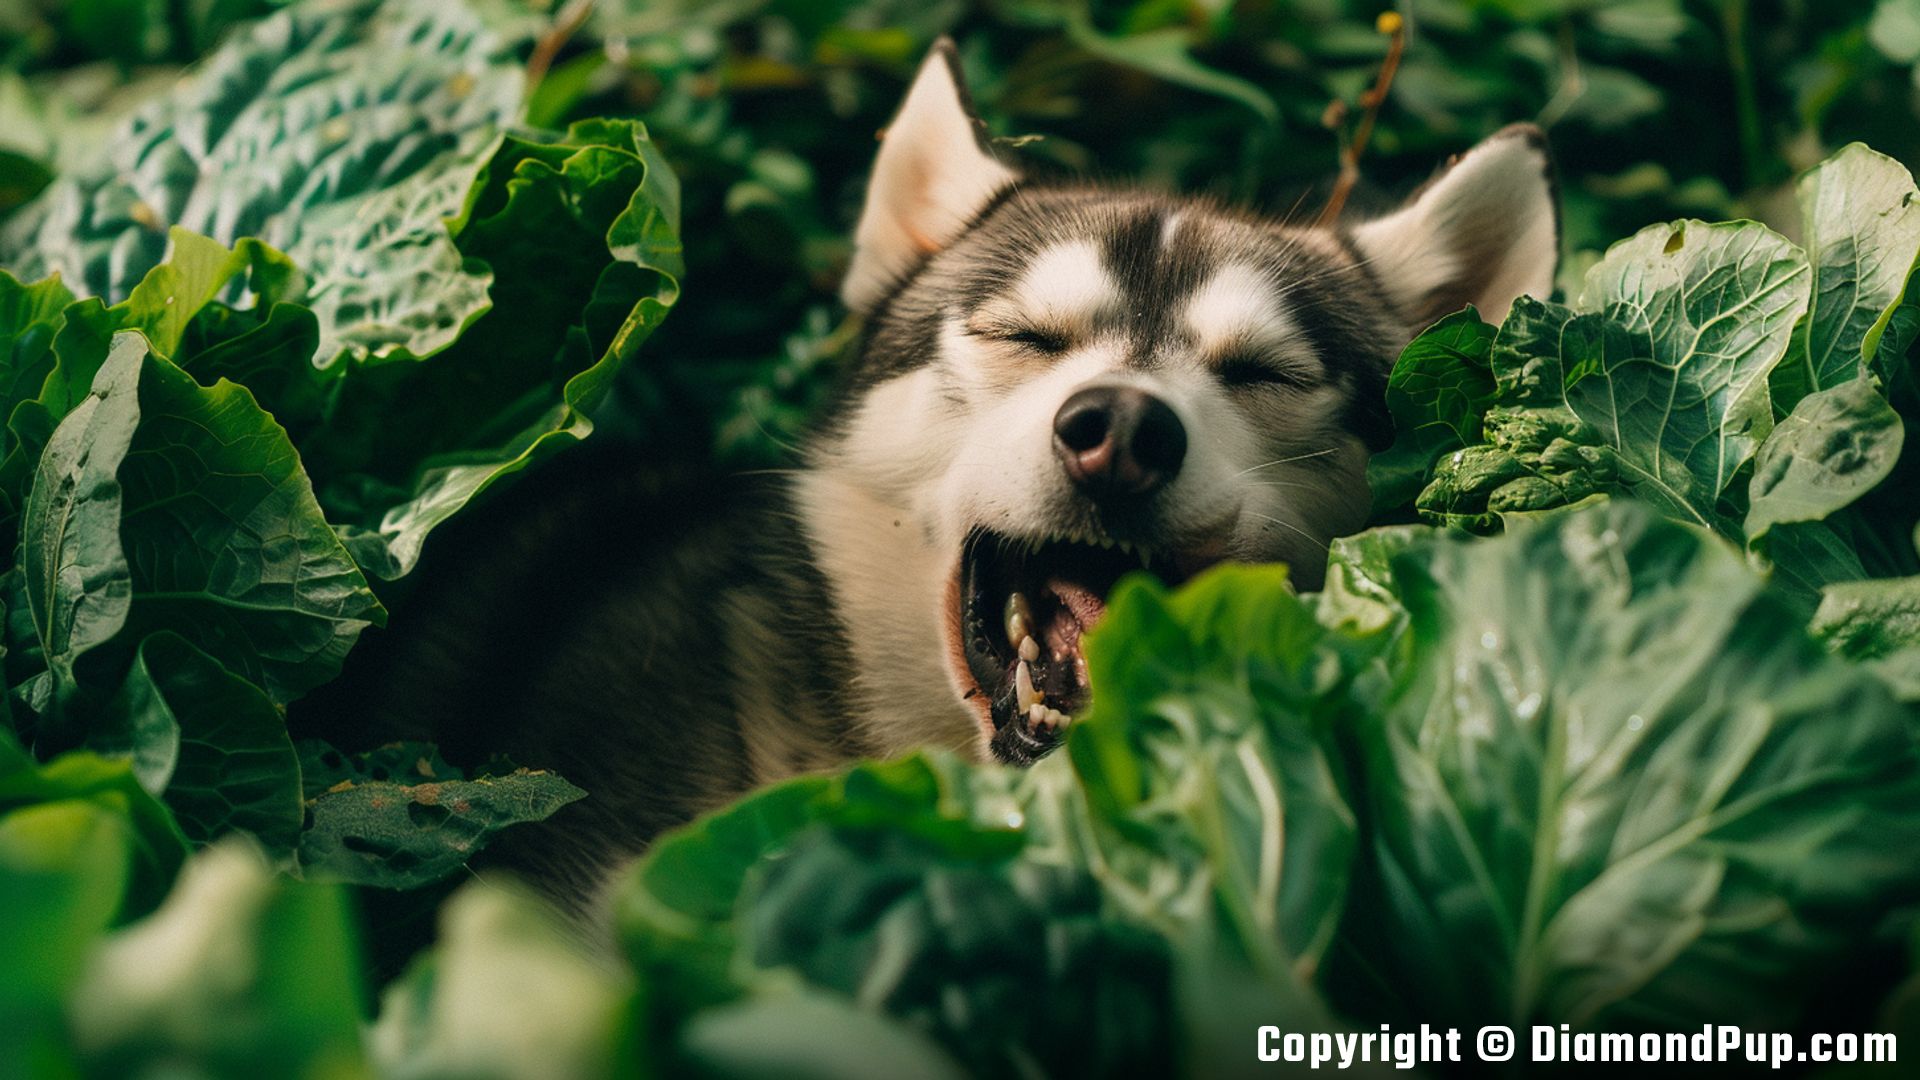 Photograph of a Cute Husky Eating Lettuce